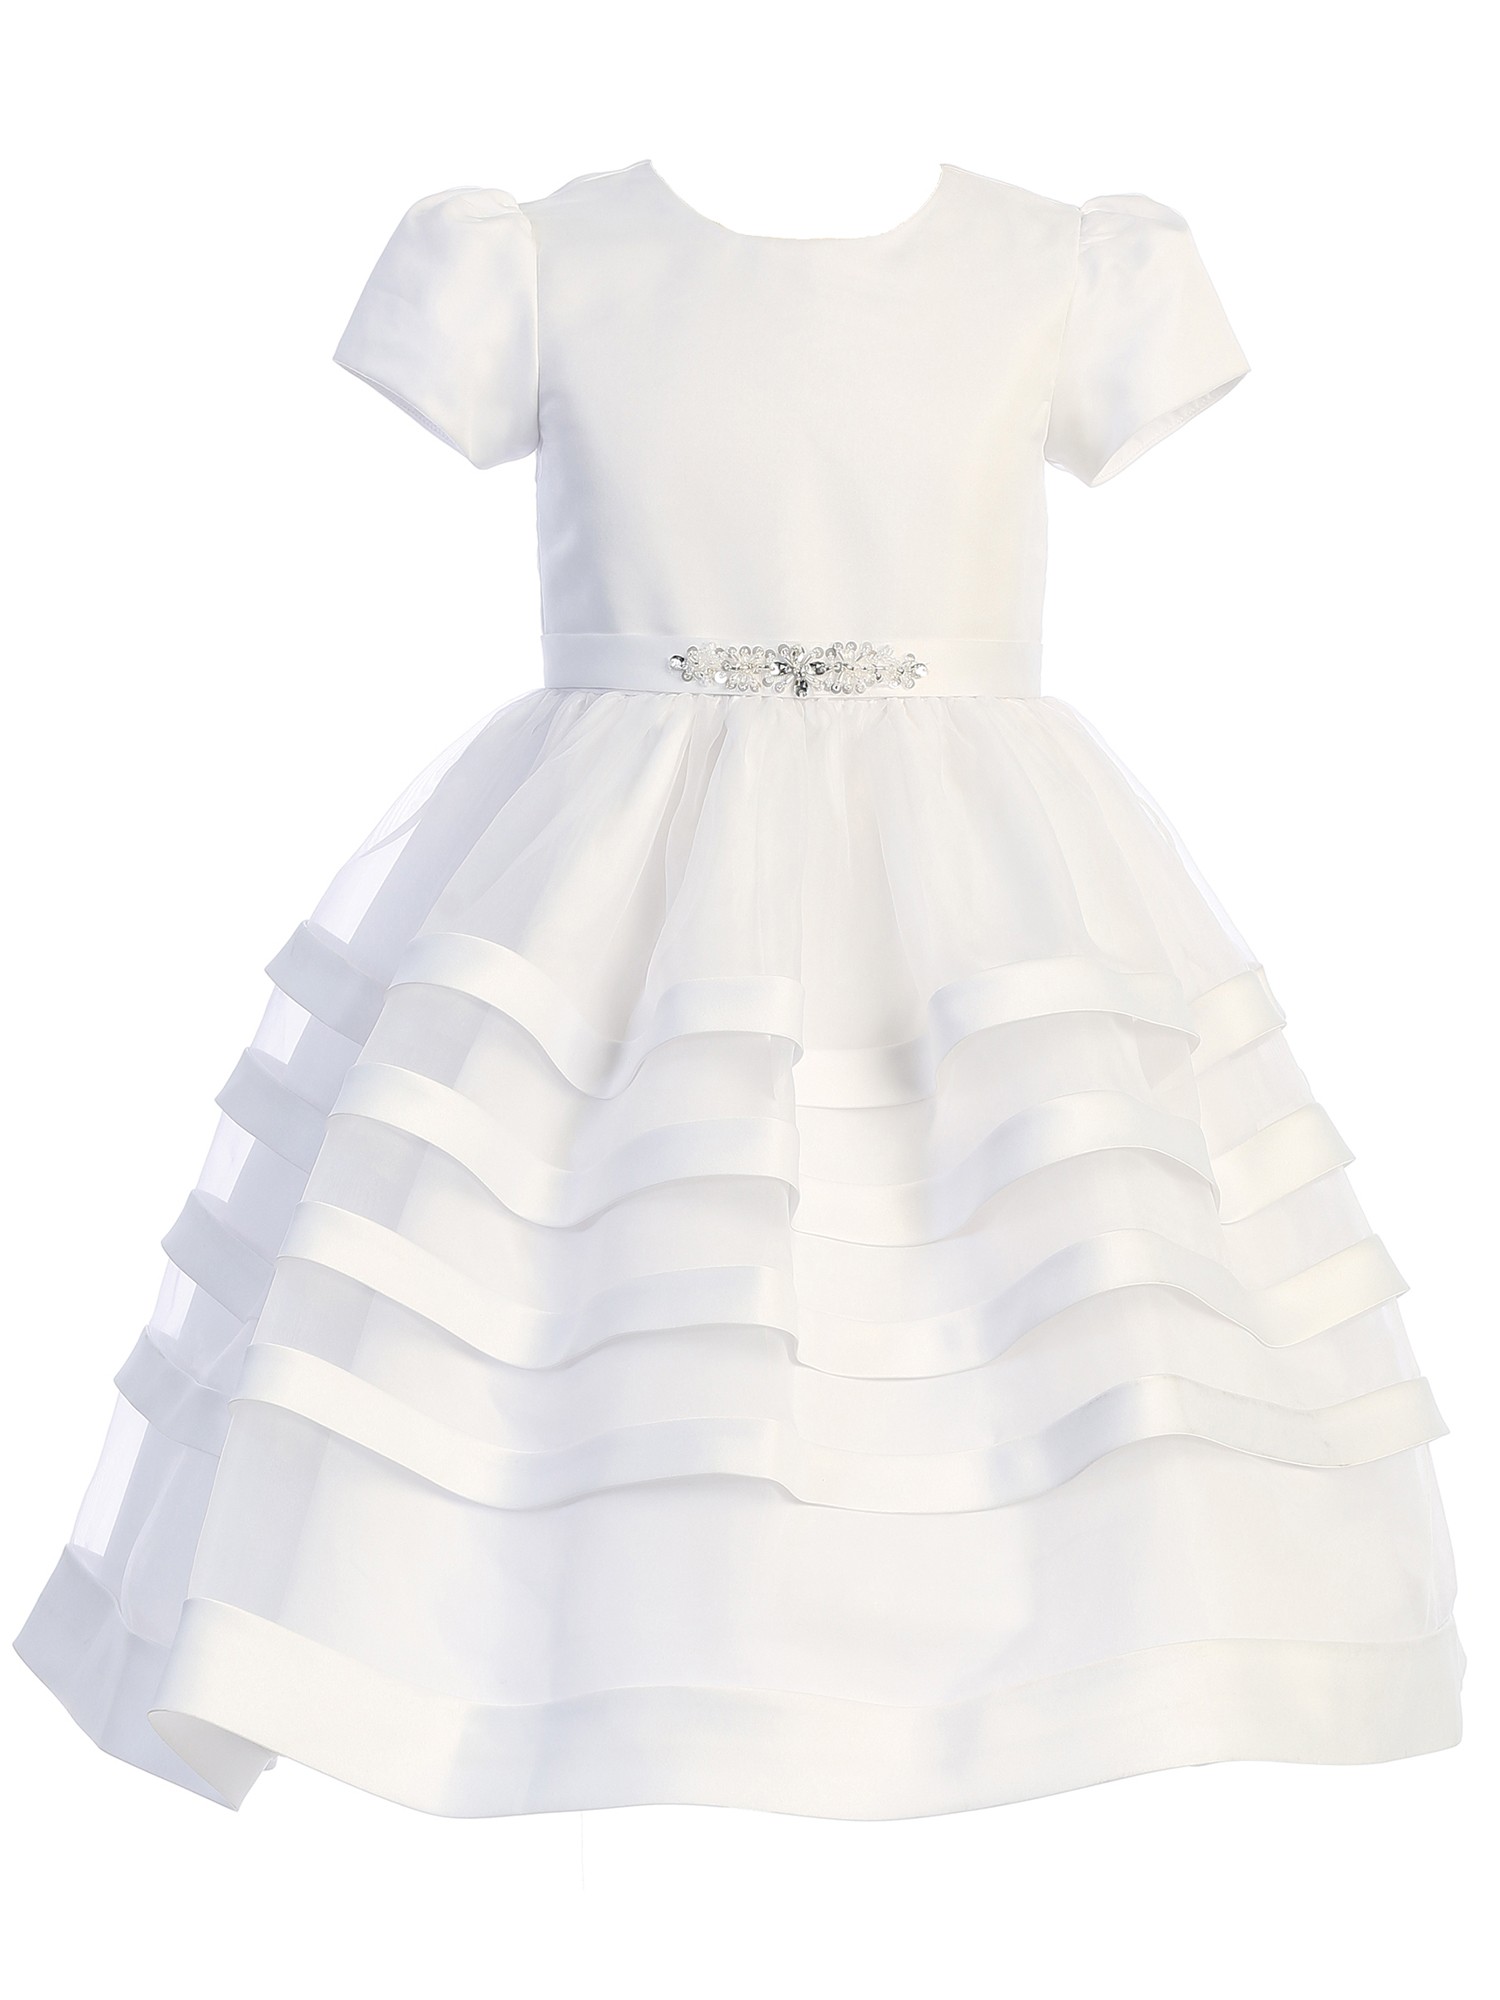 Swea Pea  Lilli White Satin Bodice Tulle Communion Dress Girls -  Walmart.com - Walmart.com